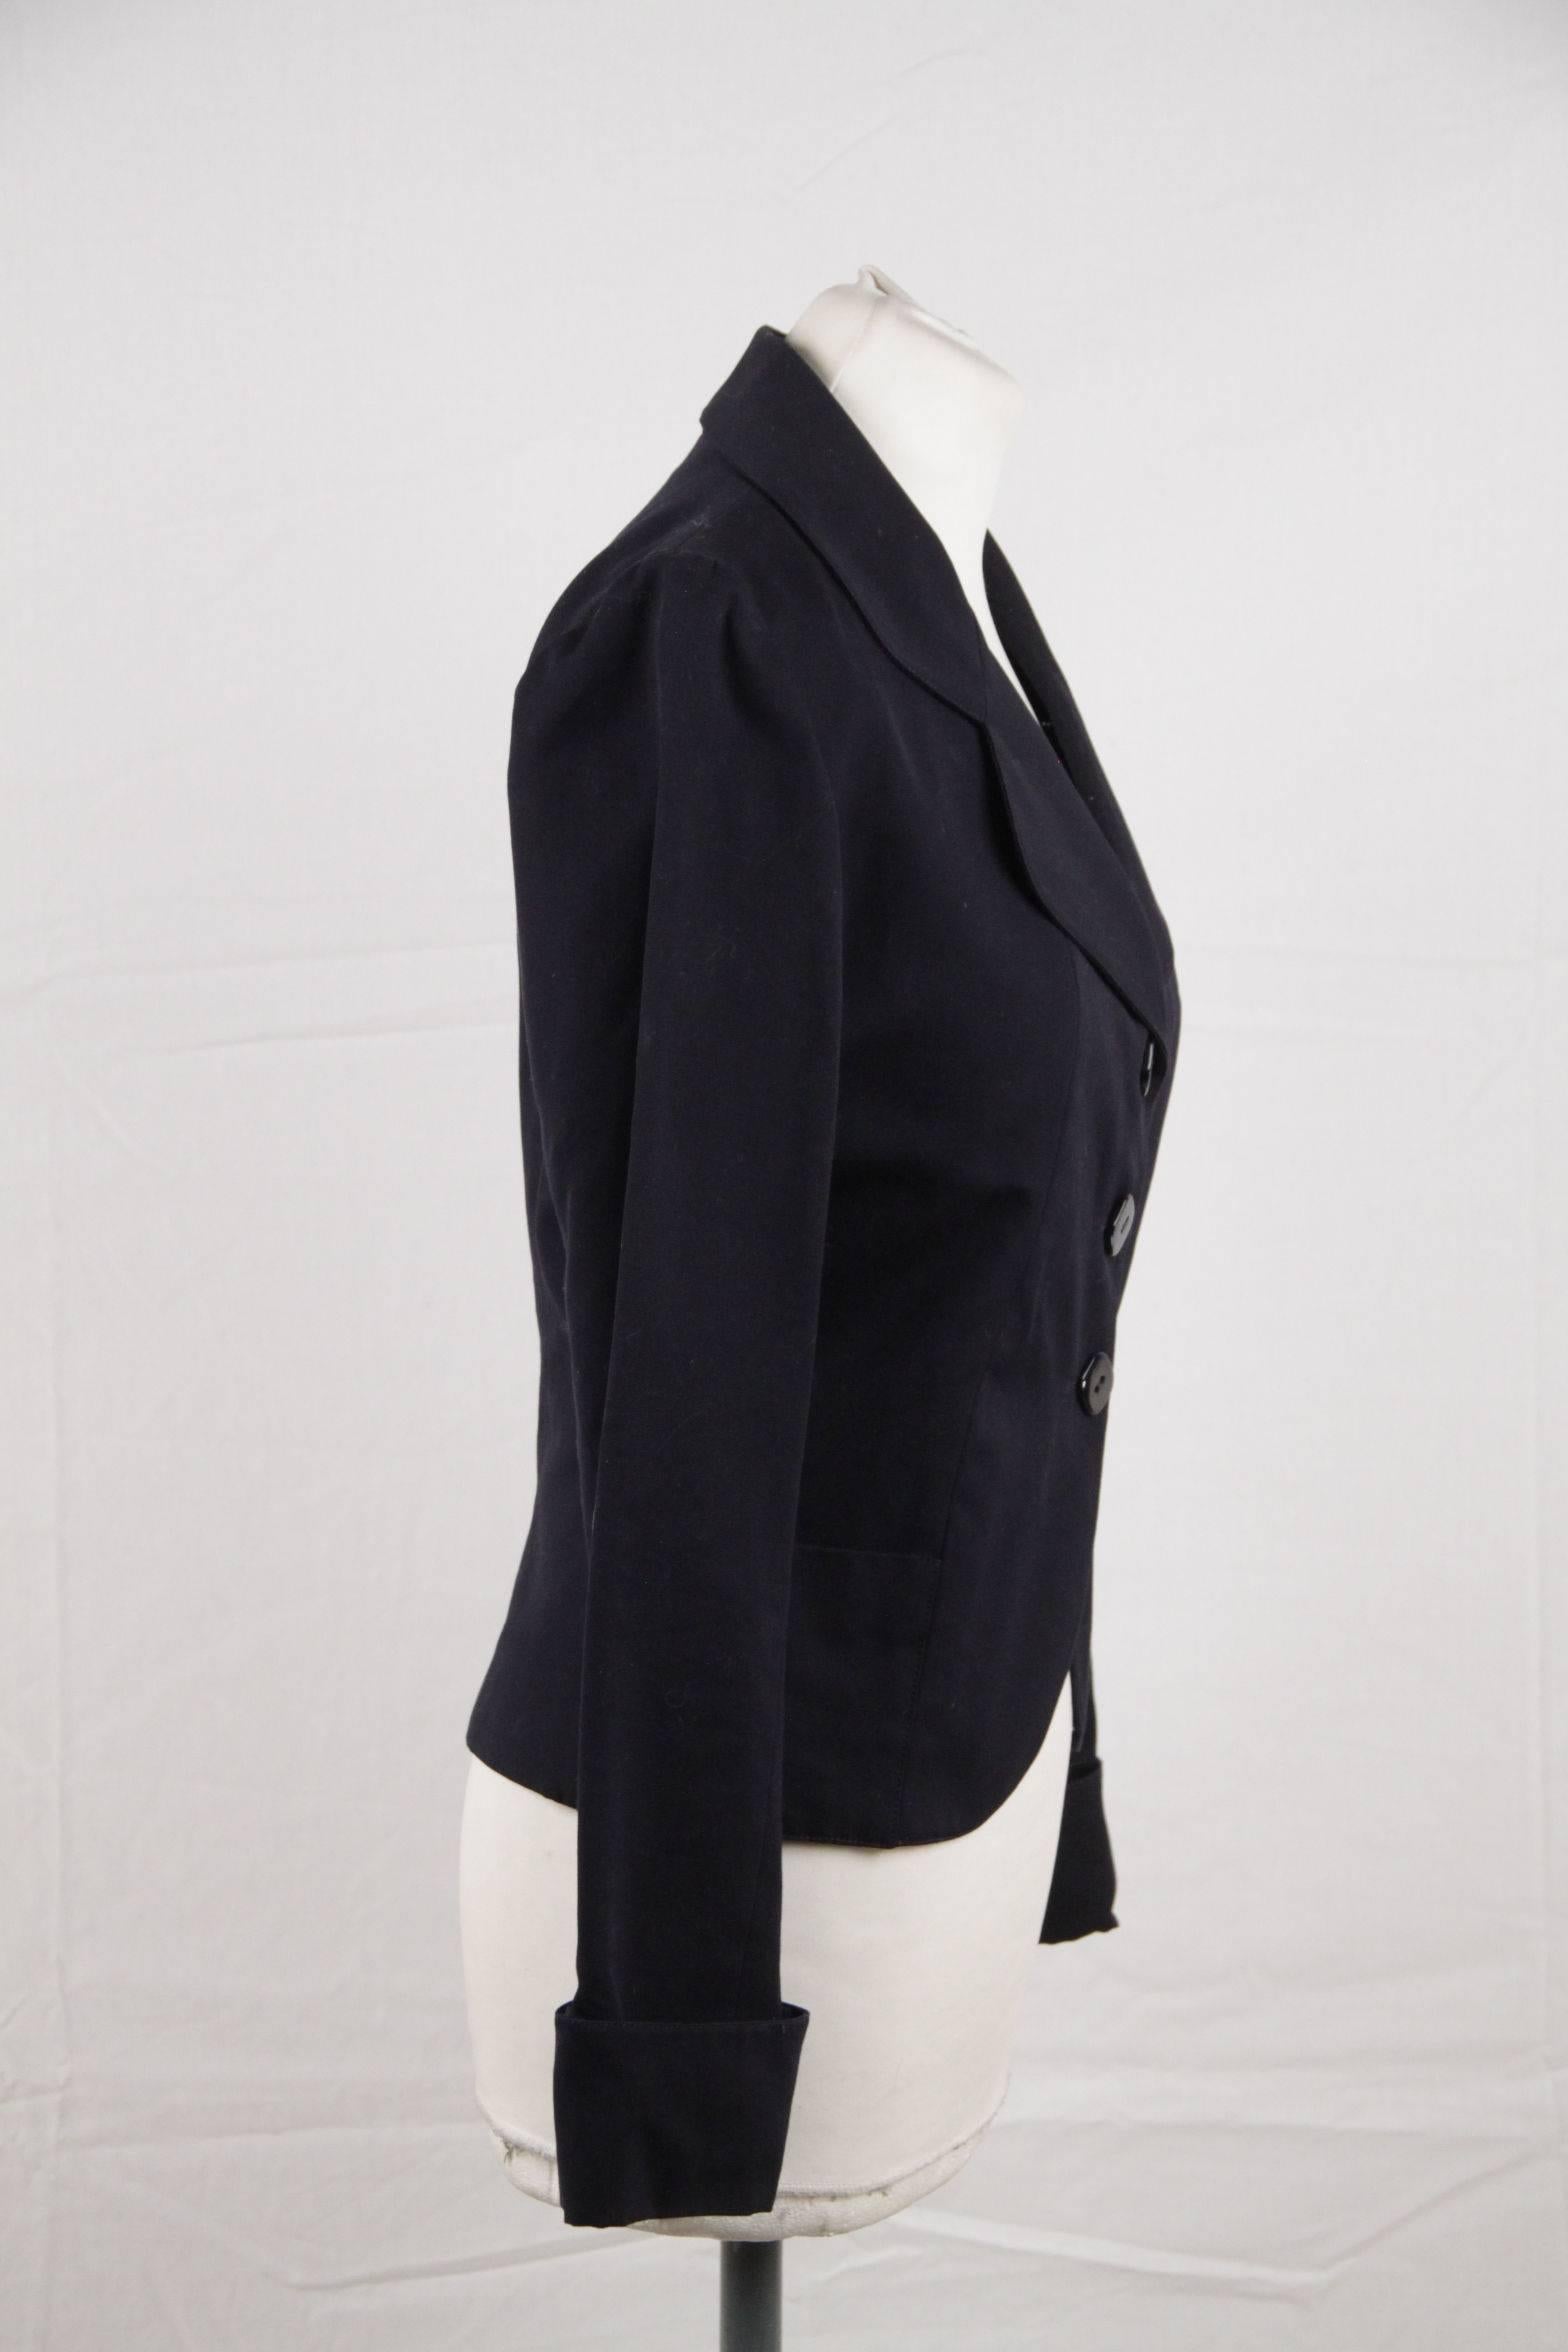 Black KARL LAGERFELD Navy Blue Cotton BLAZER Jacket SIZE 38